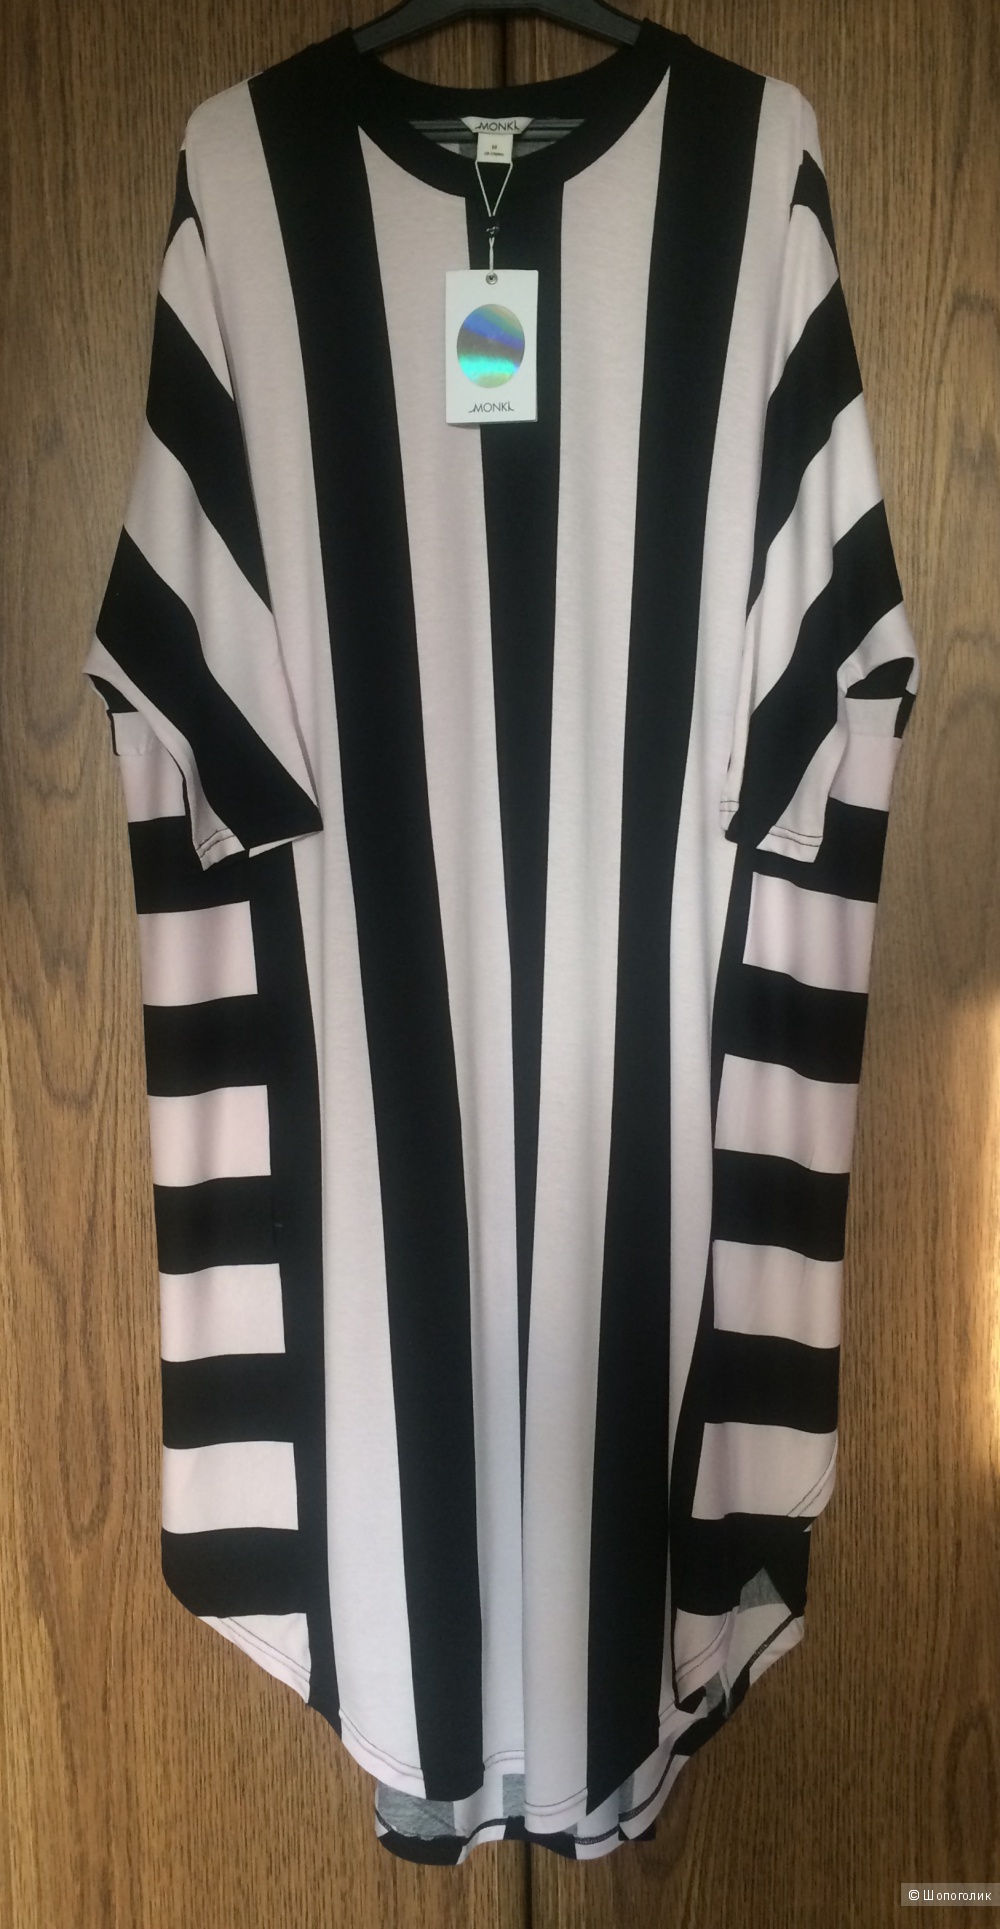 Платье-футболка оверсайз MONKI размер M (48-50)